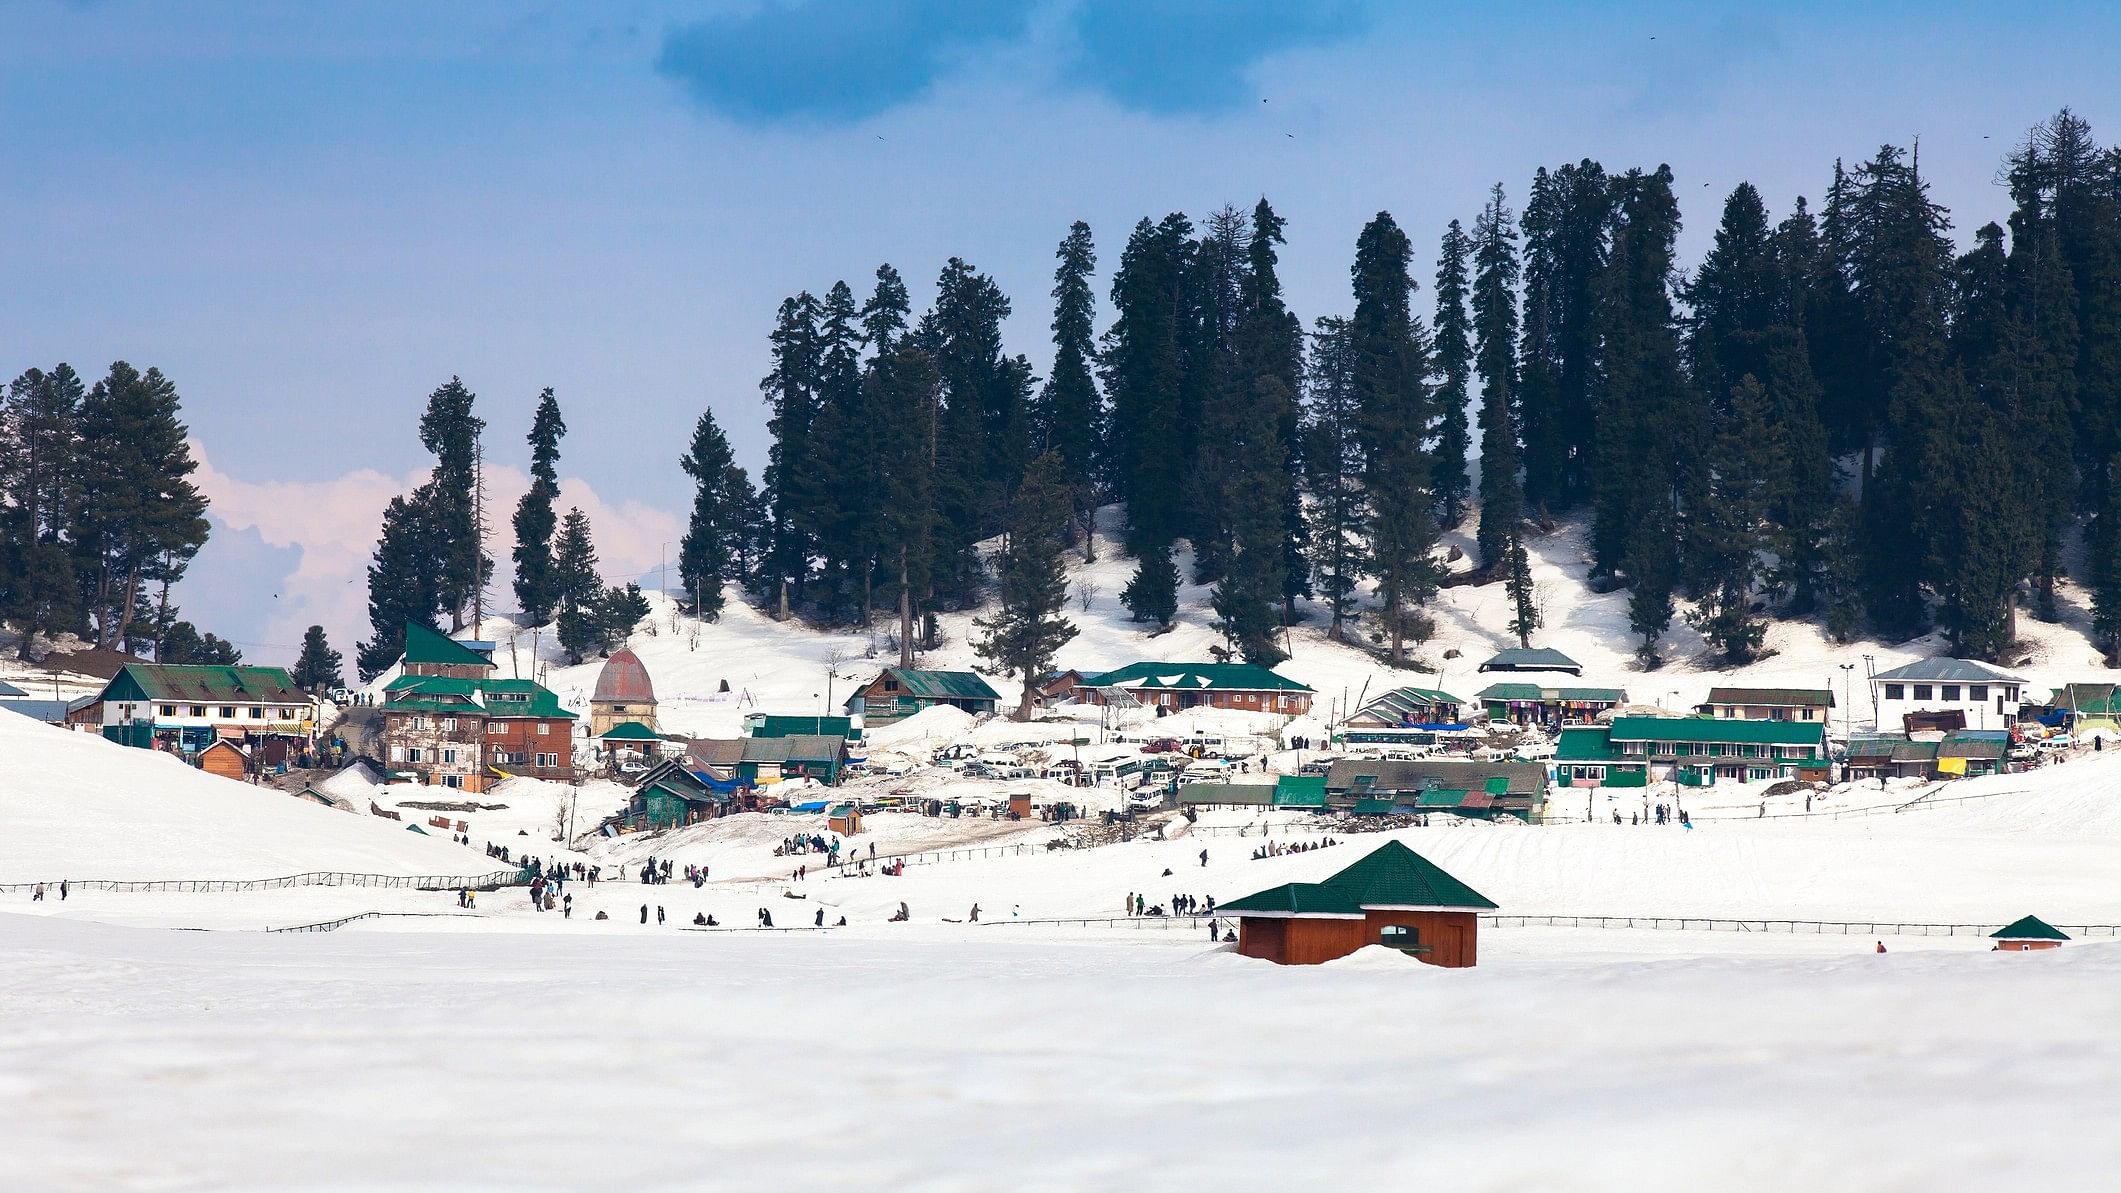 <div class="paragraphs"><p>Representative image showing snow in Kashmir.</p></div>